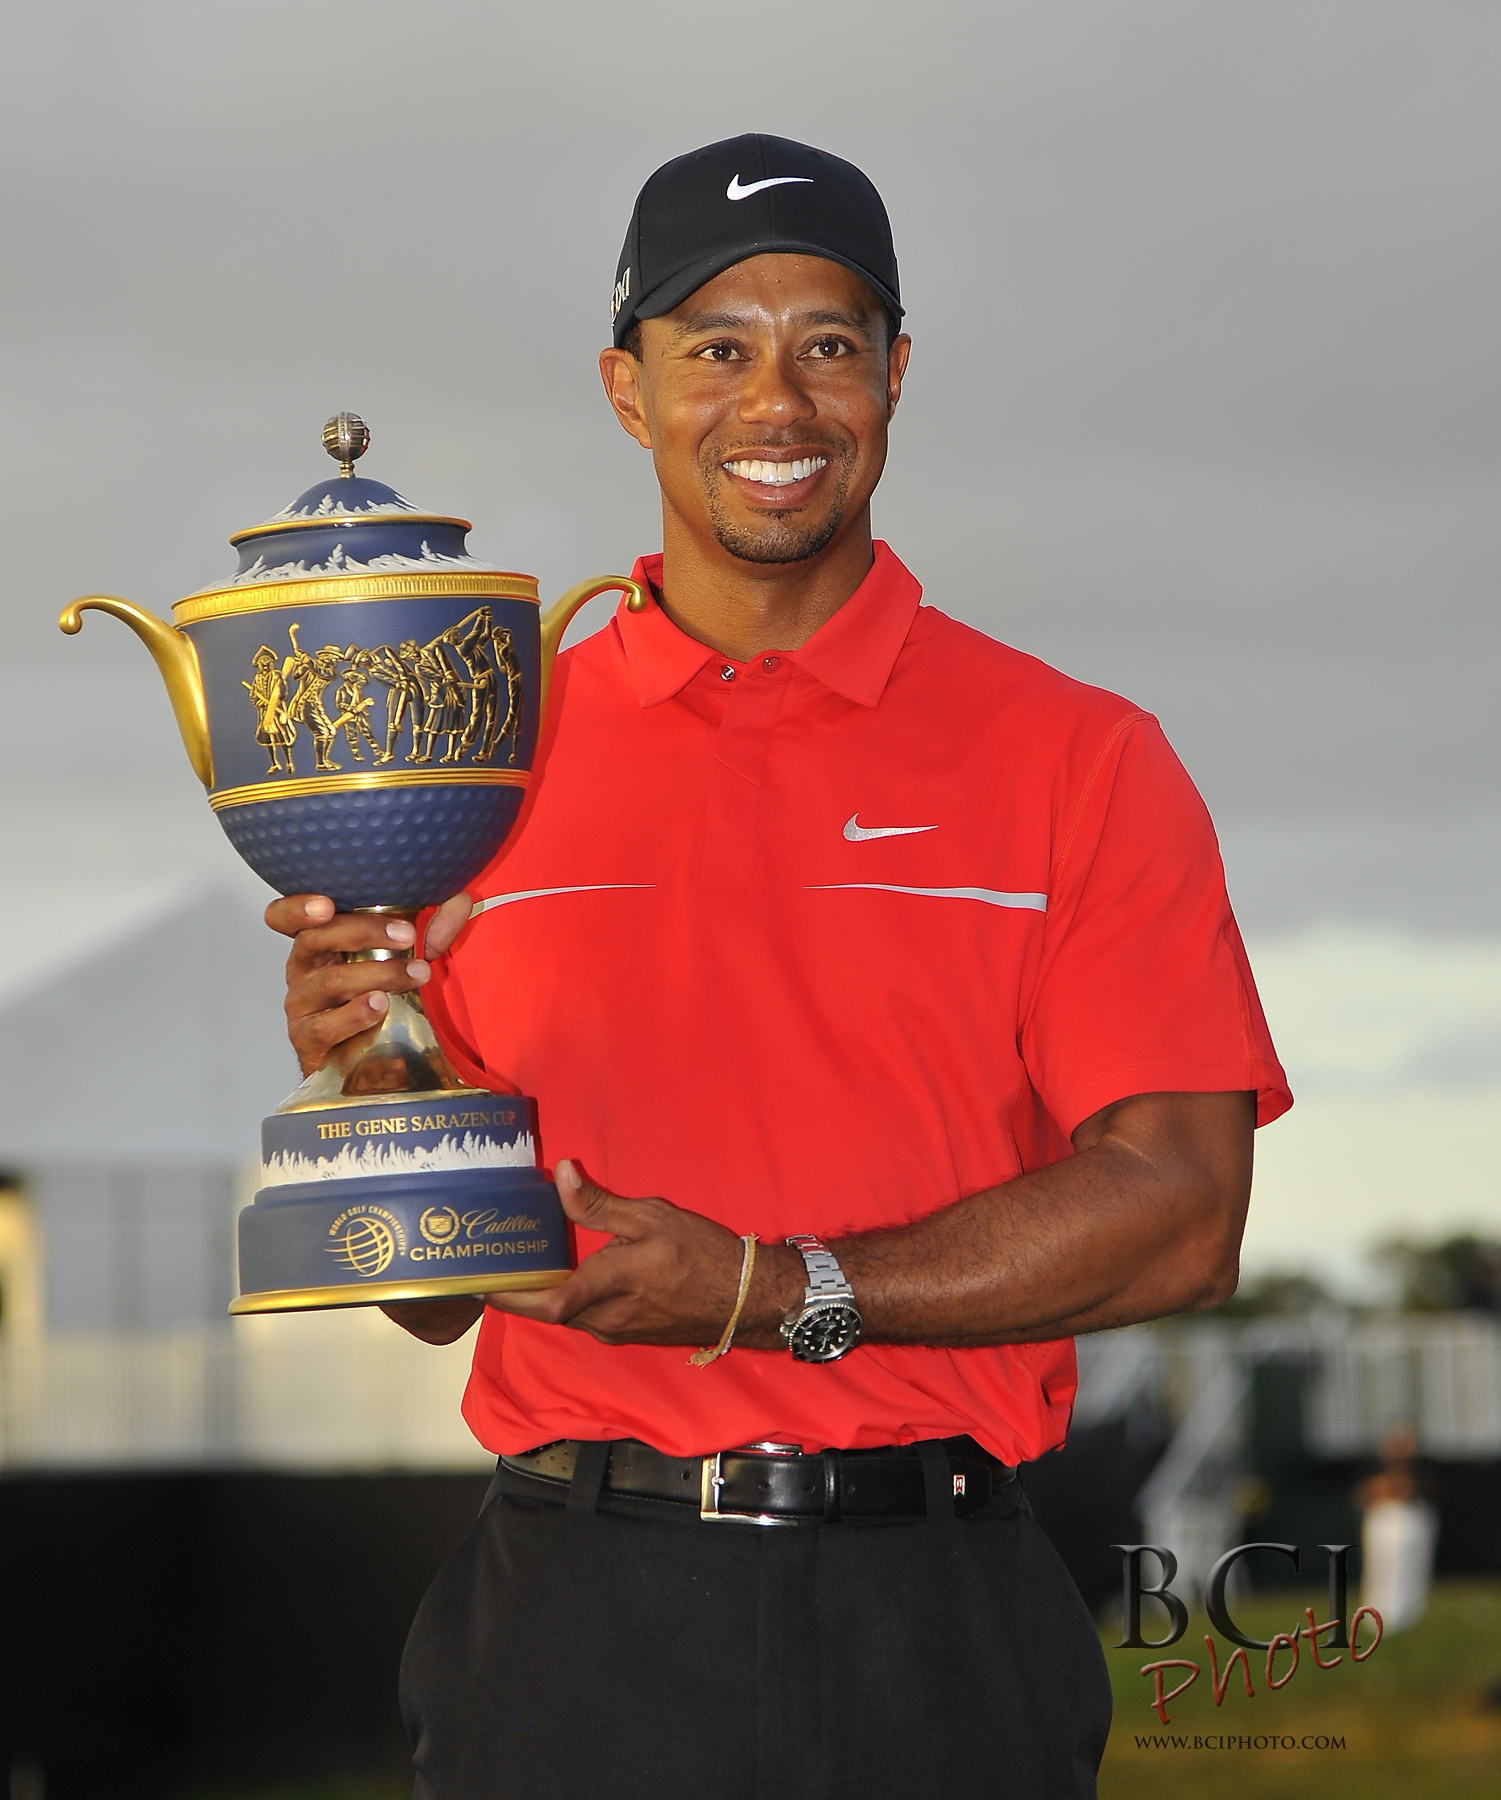 PGA: WGC Cadillac Championships at Trump Doral Golf Club